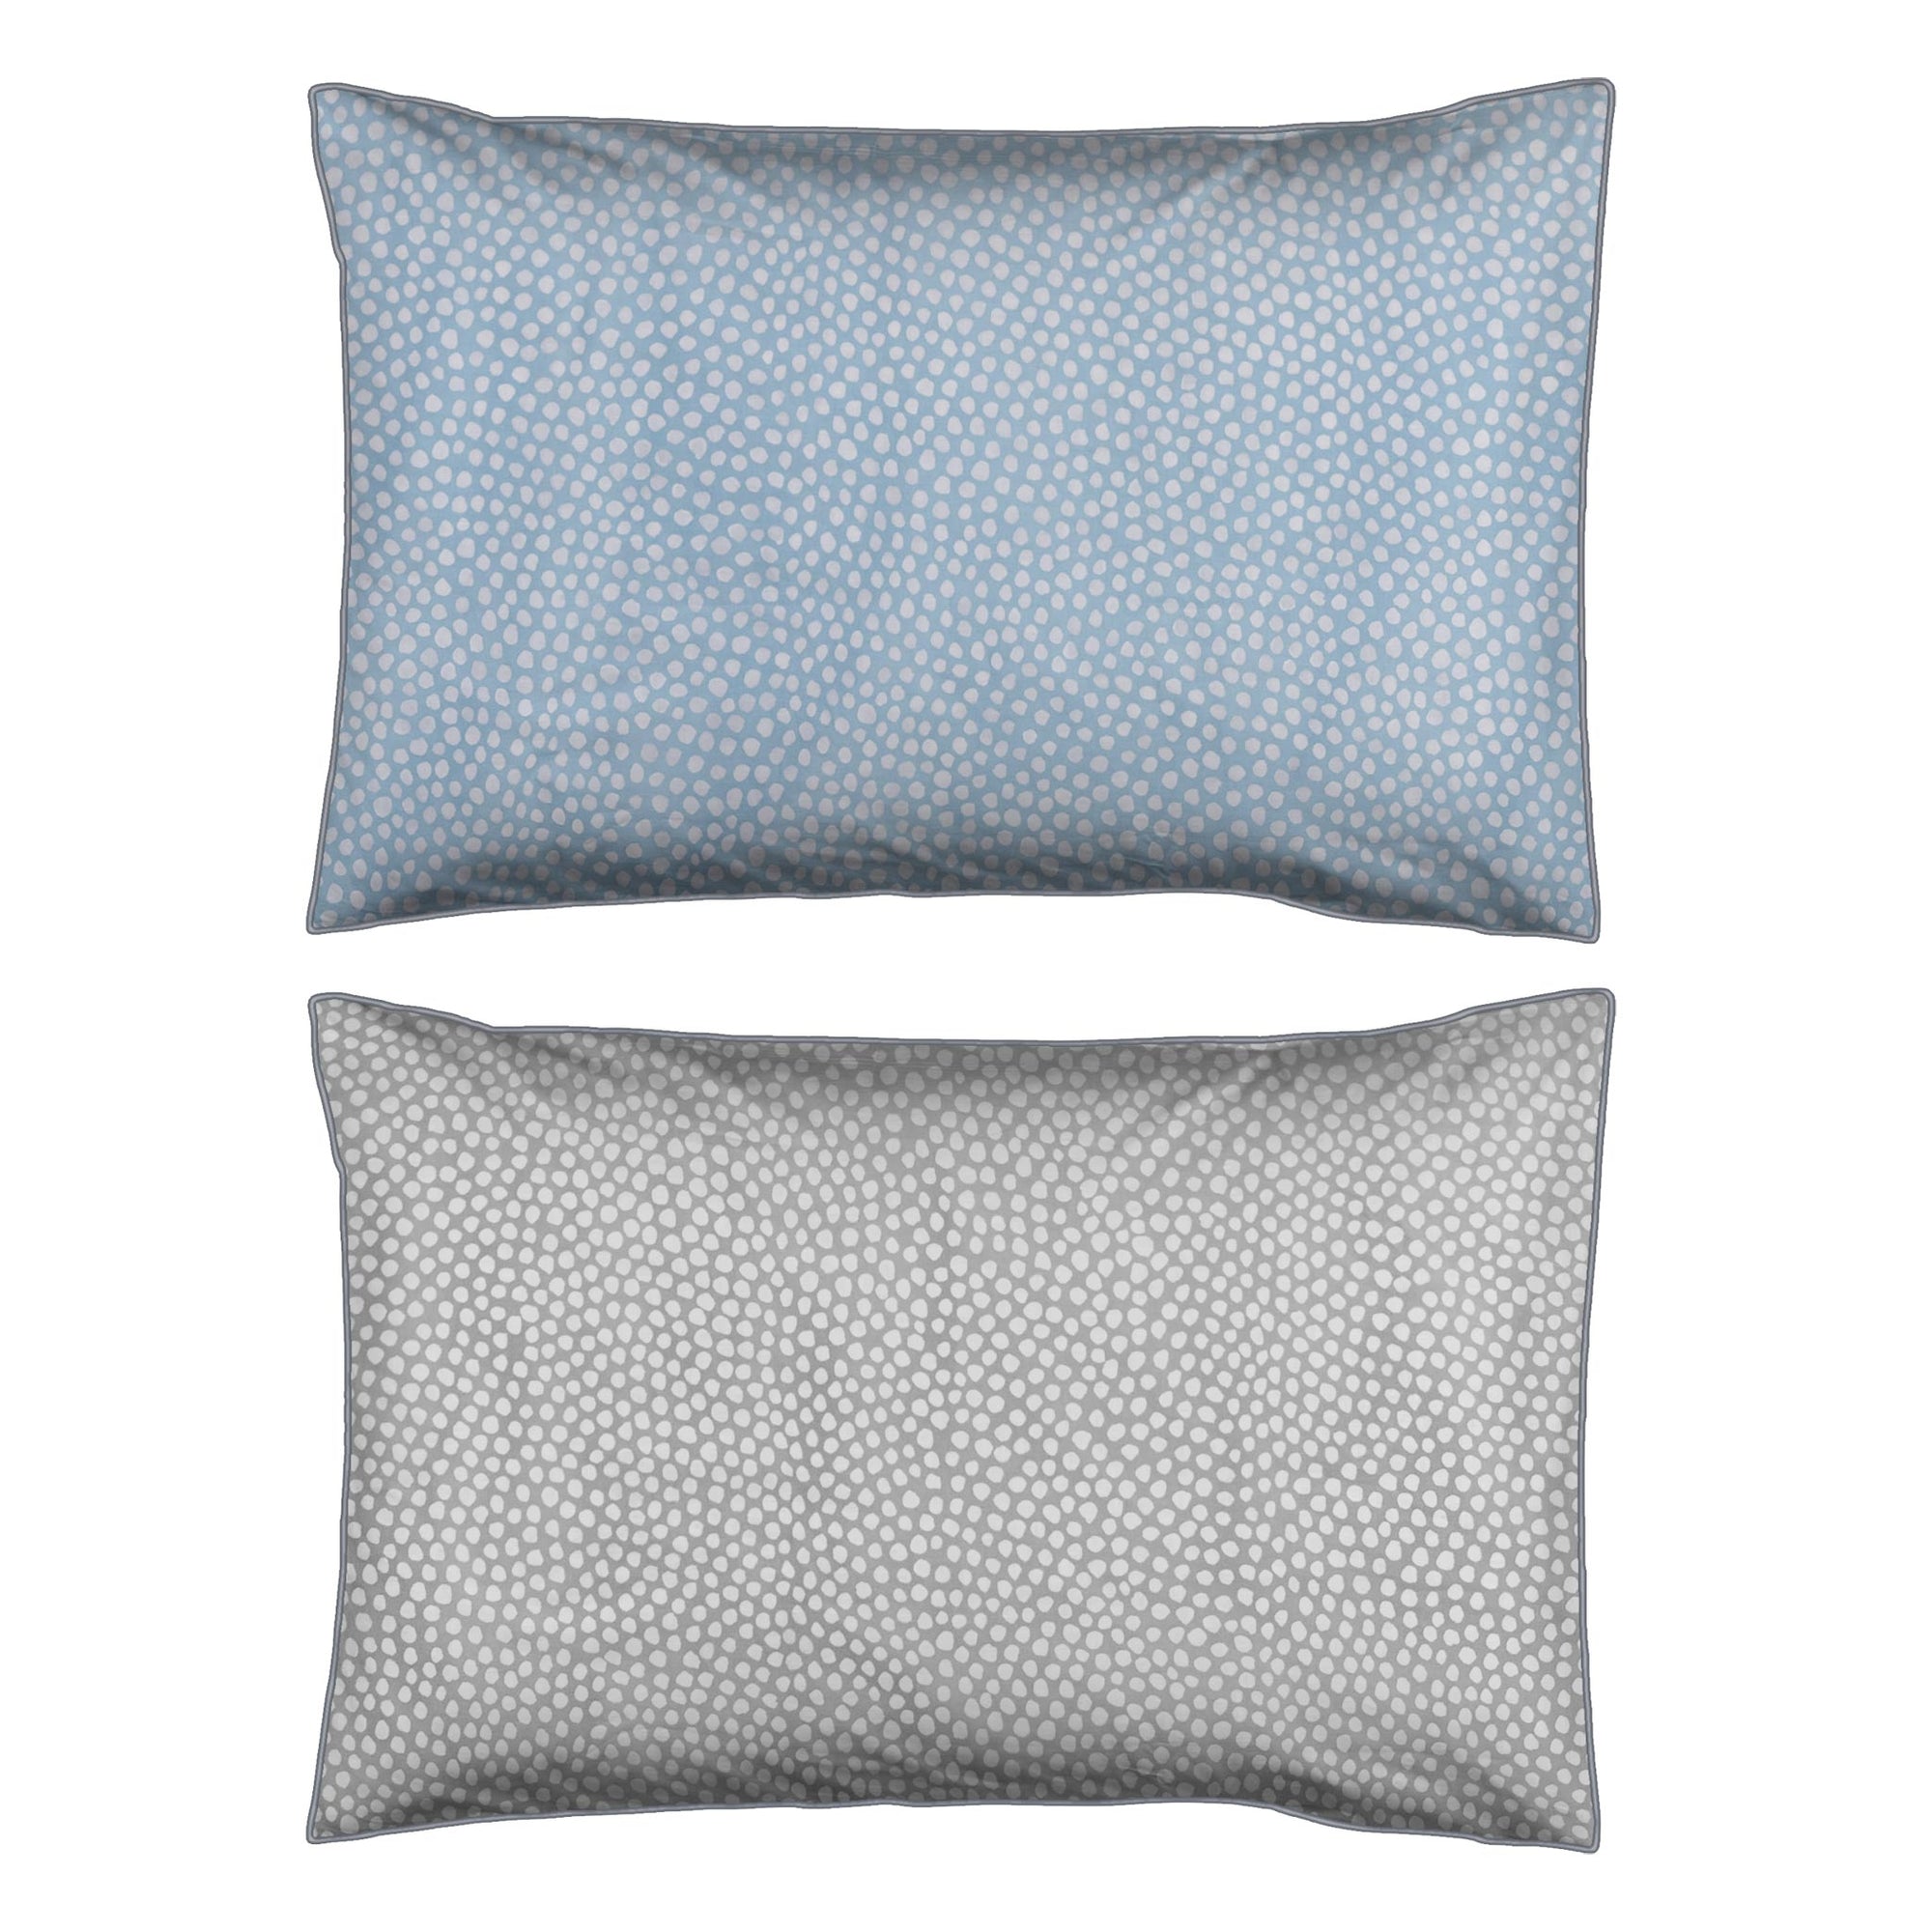 Ein Paar Aqua Blue Polka Dot Standard-Kissenbezüge aus 100 % Perkal-Baumwolle (200 TC).